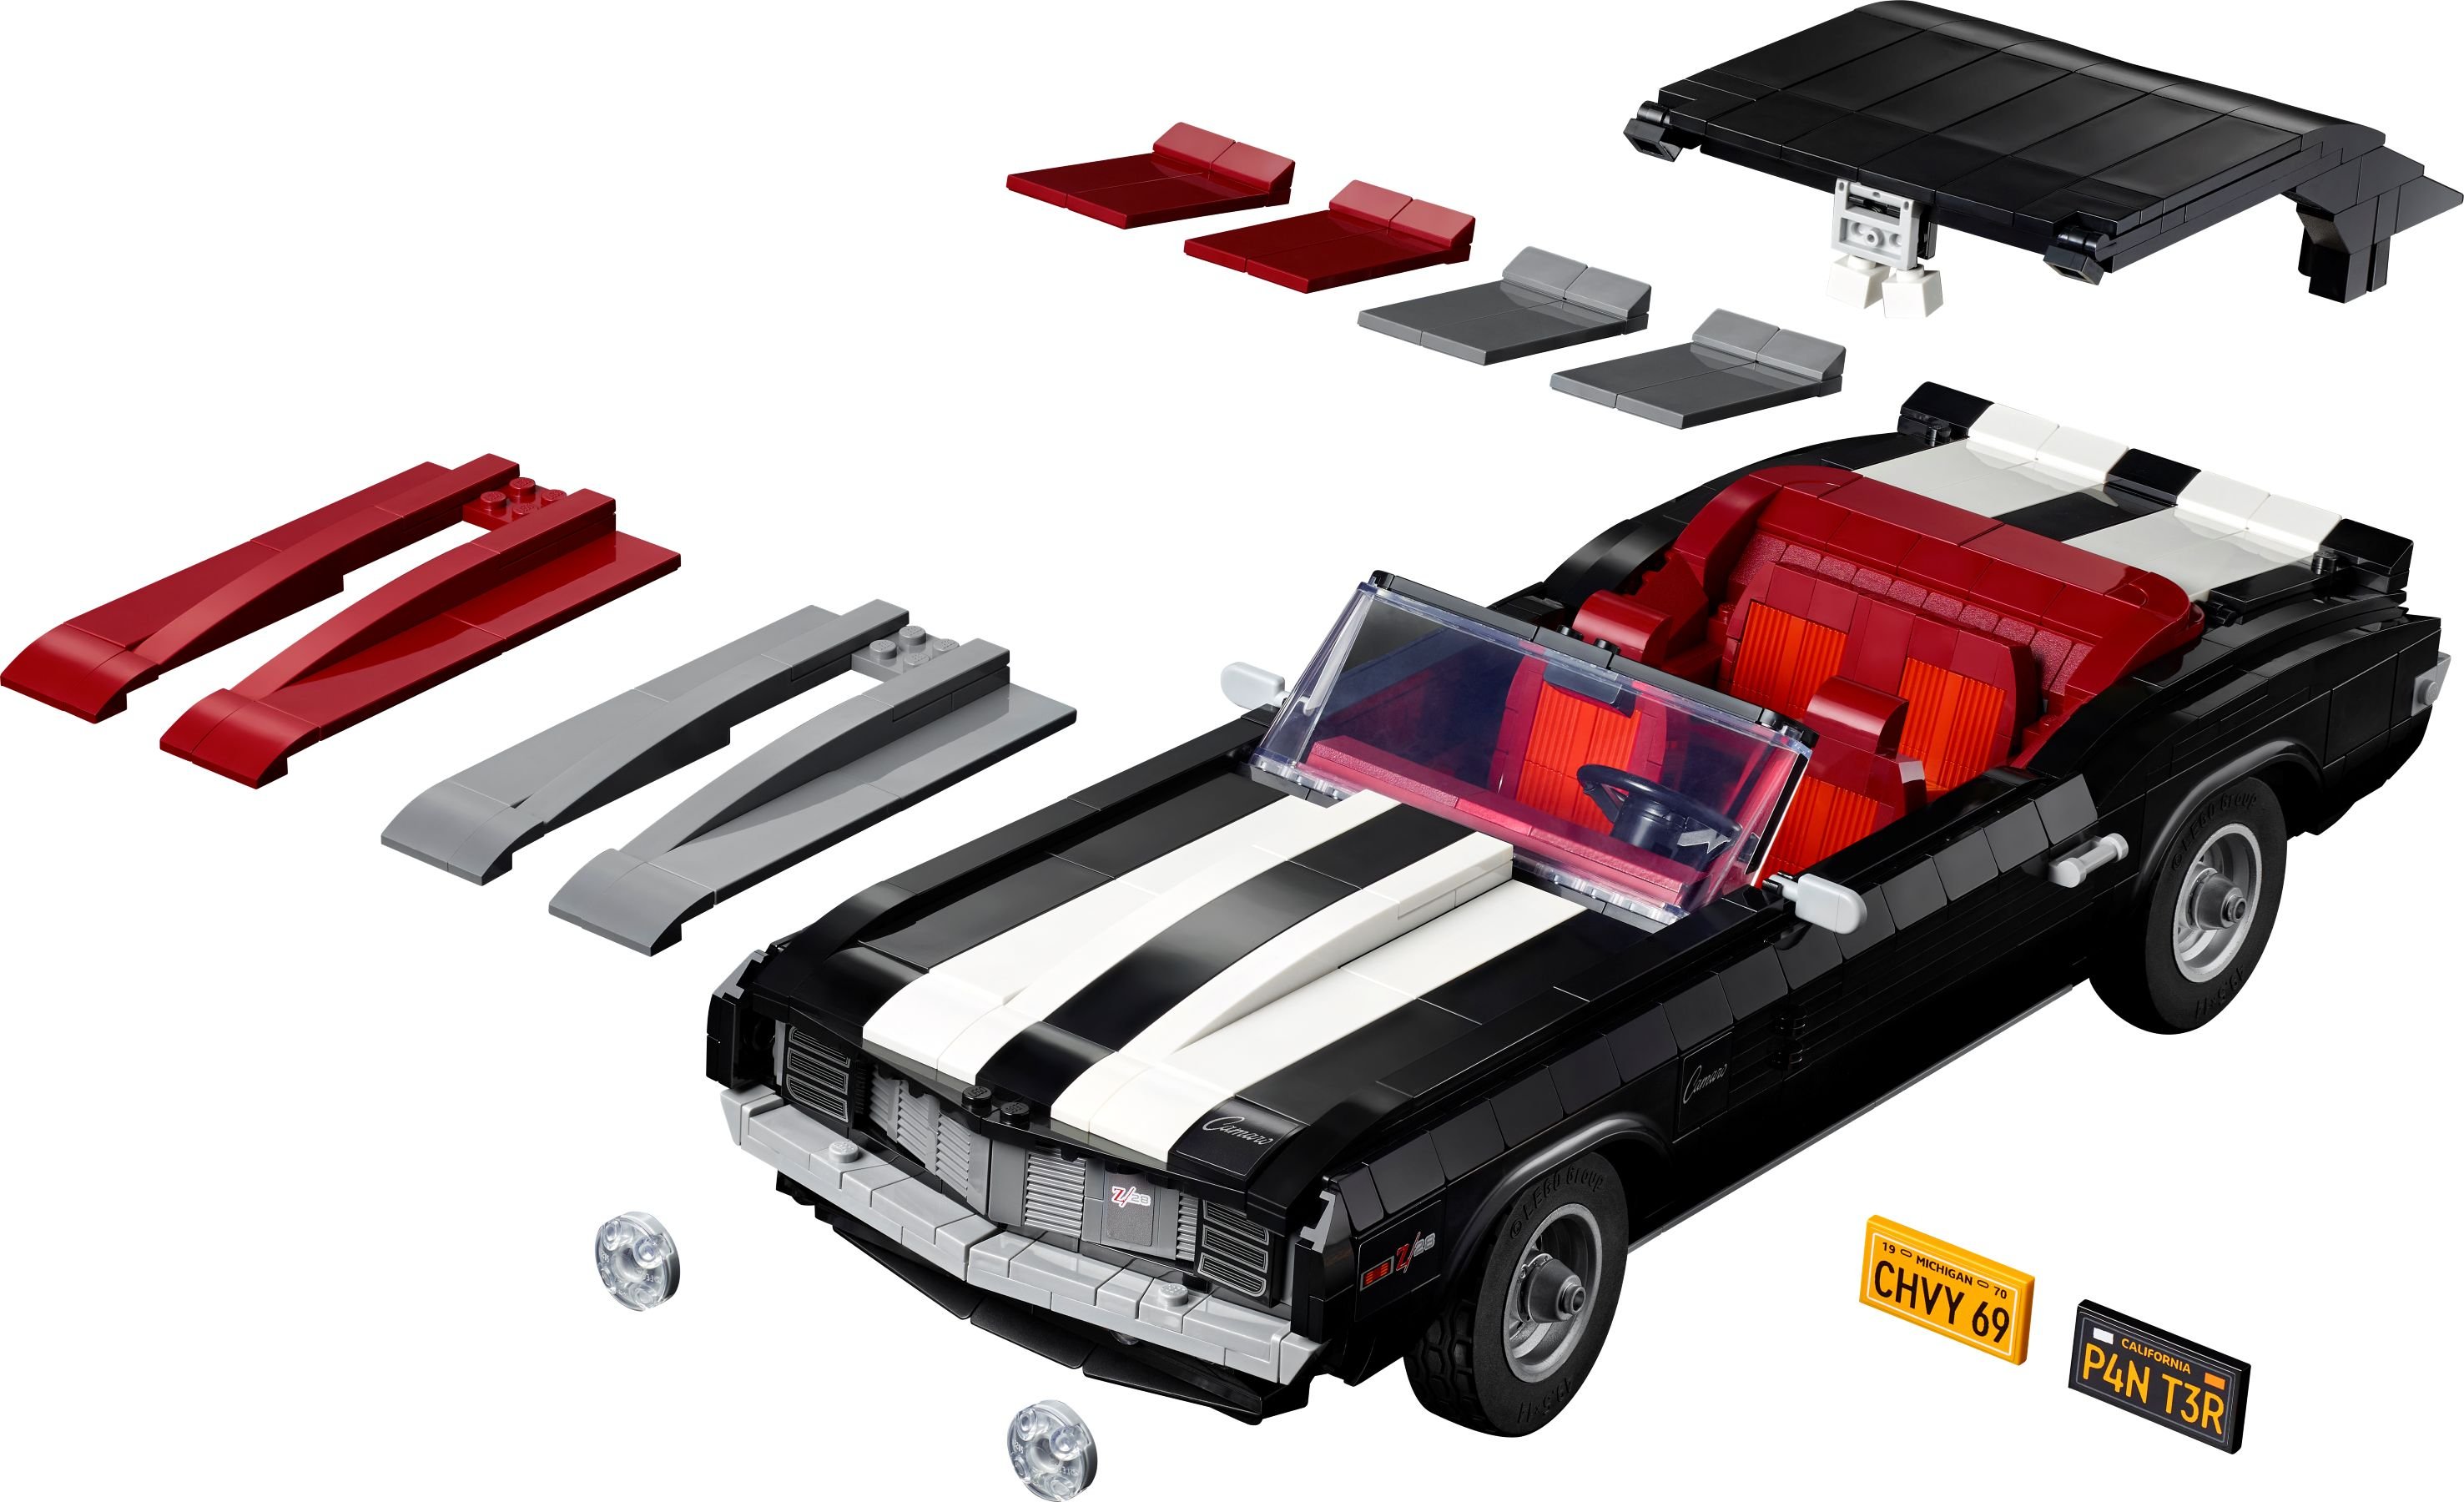 LEGO Advanced Models 10304 Chevrolet Camaro Z28 LEGO_10304_alt2.jpg